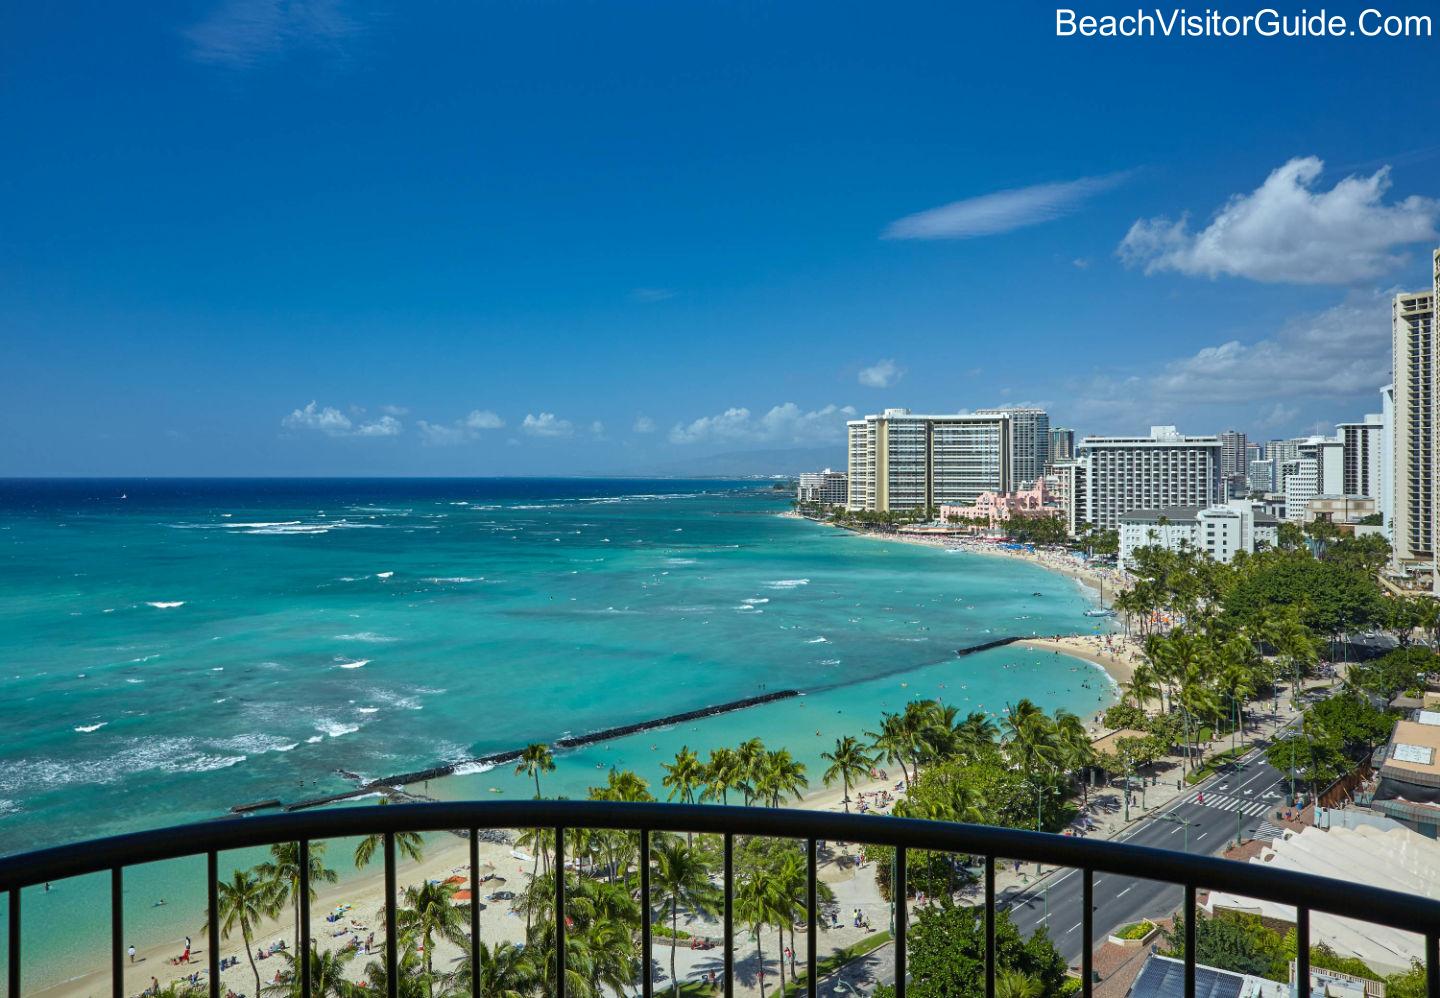 Waikiki Beach Marriott Resort Beach Visitor Guide